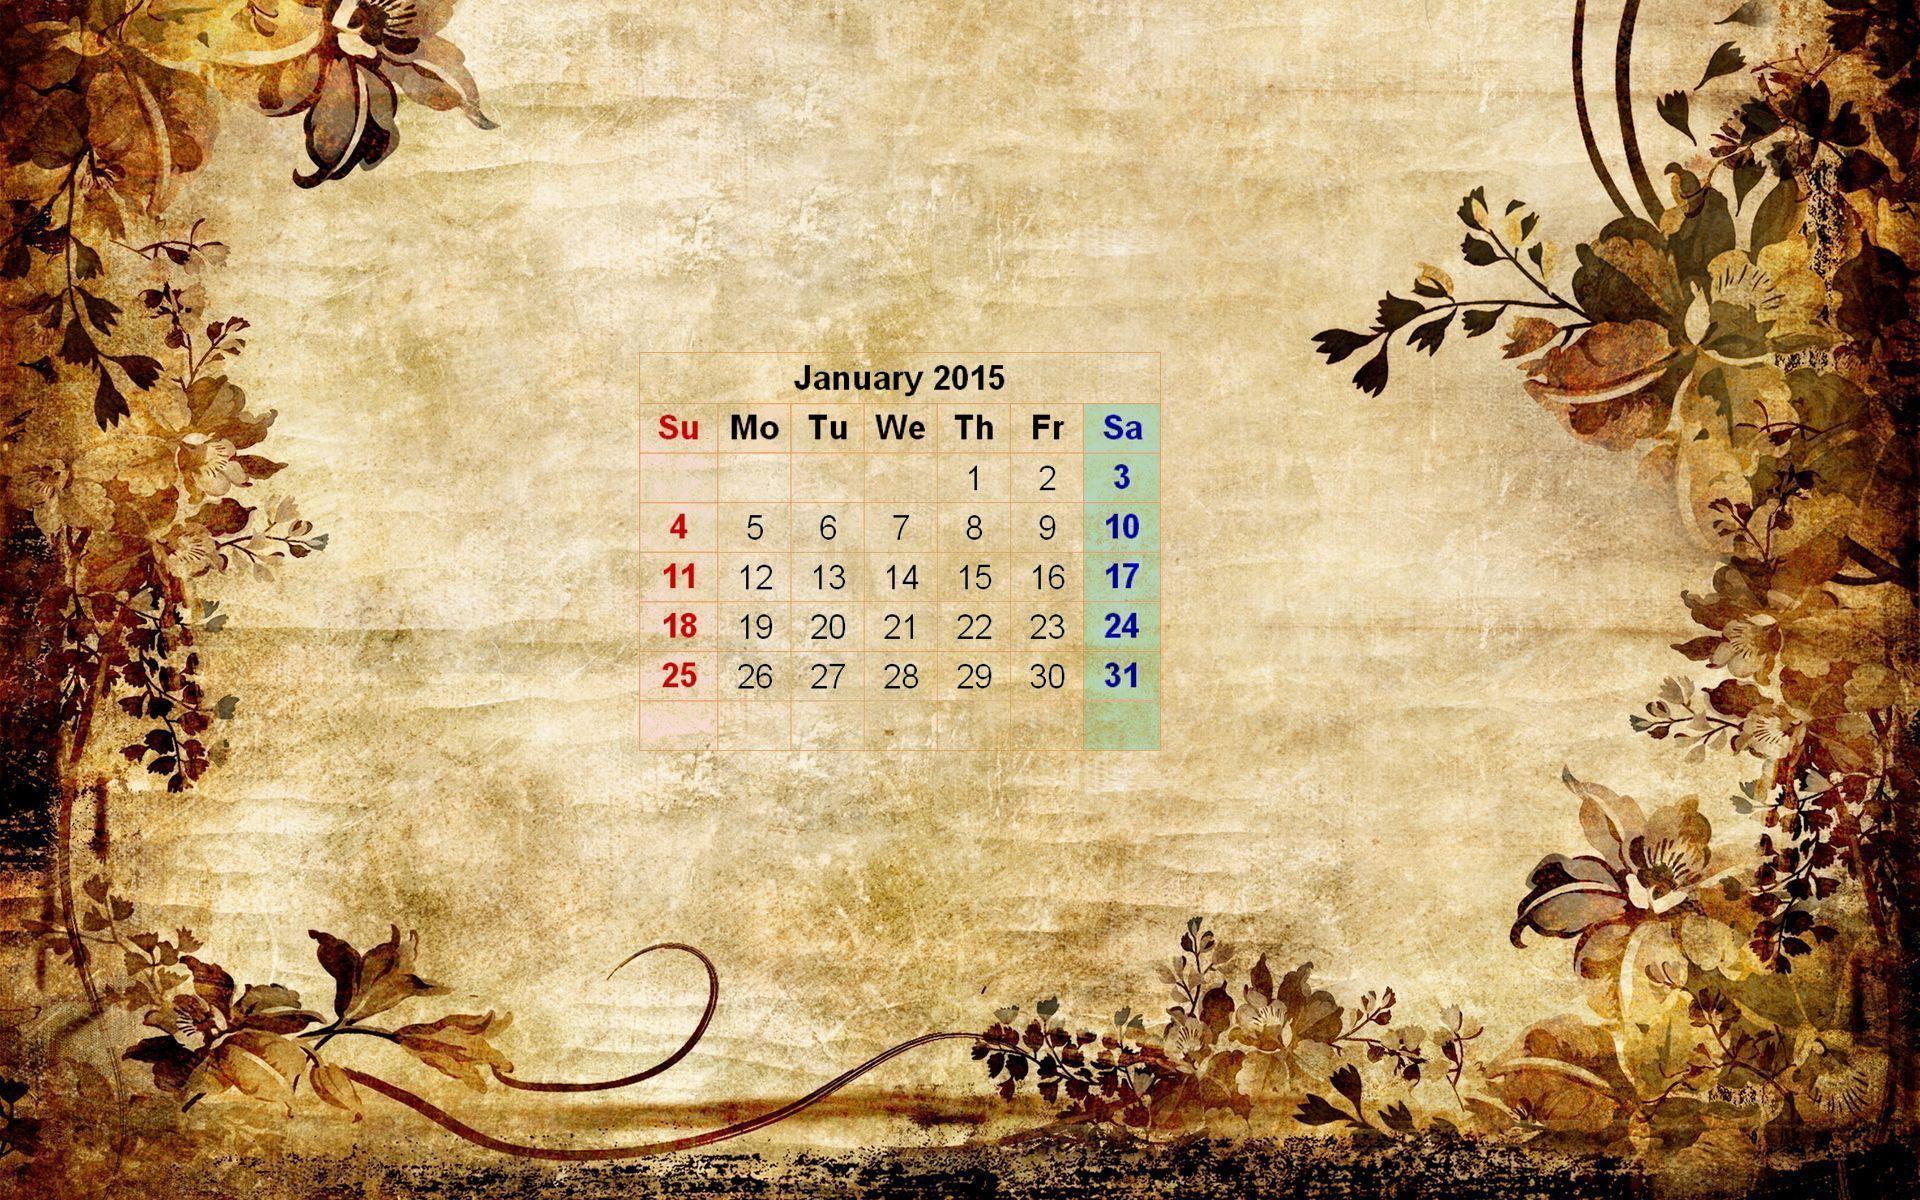 January 2015 Calendar Image and Wallpaper. Happy Holidays 2014